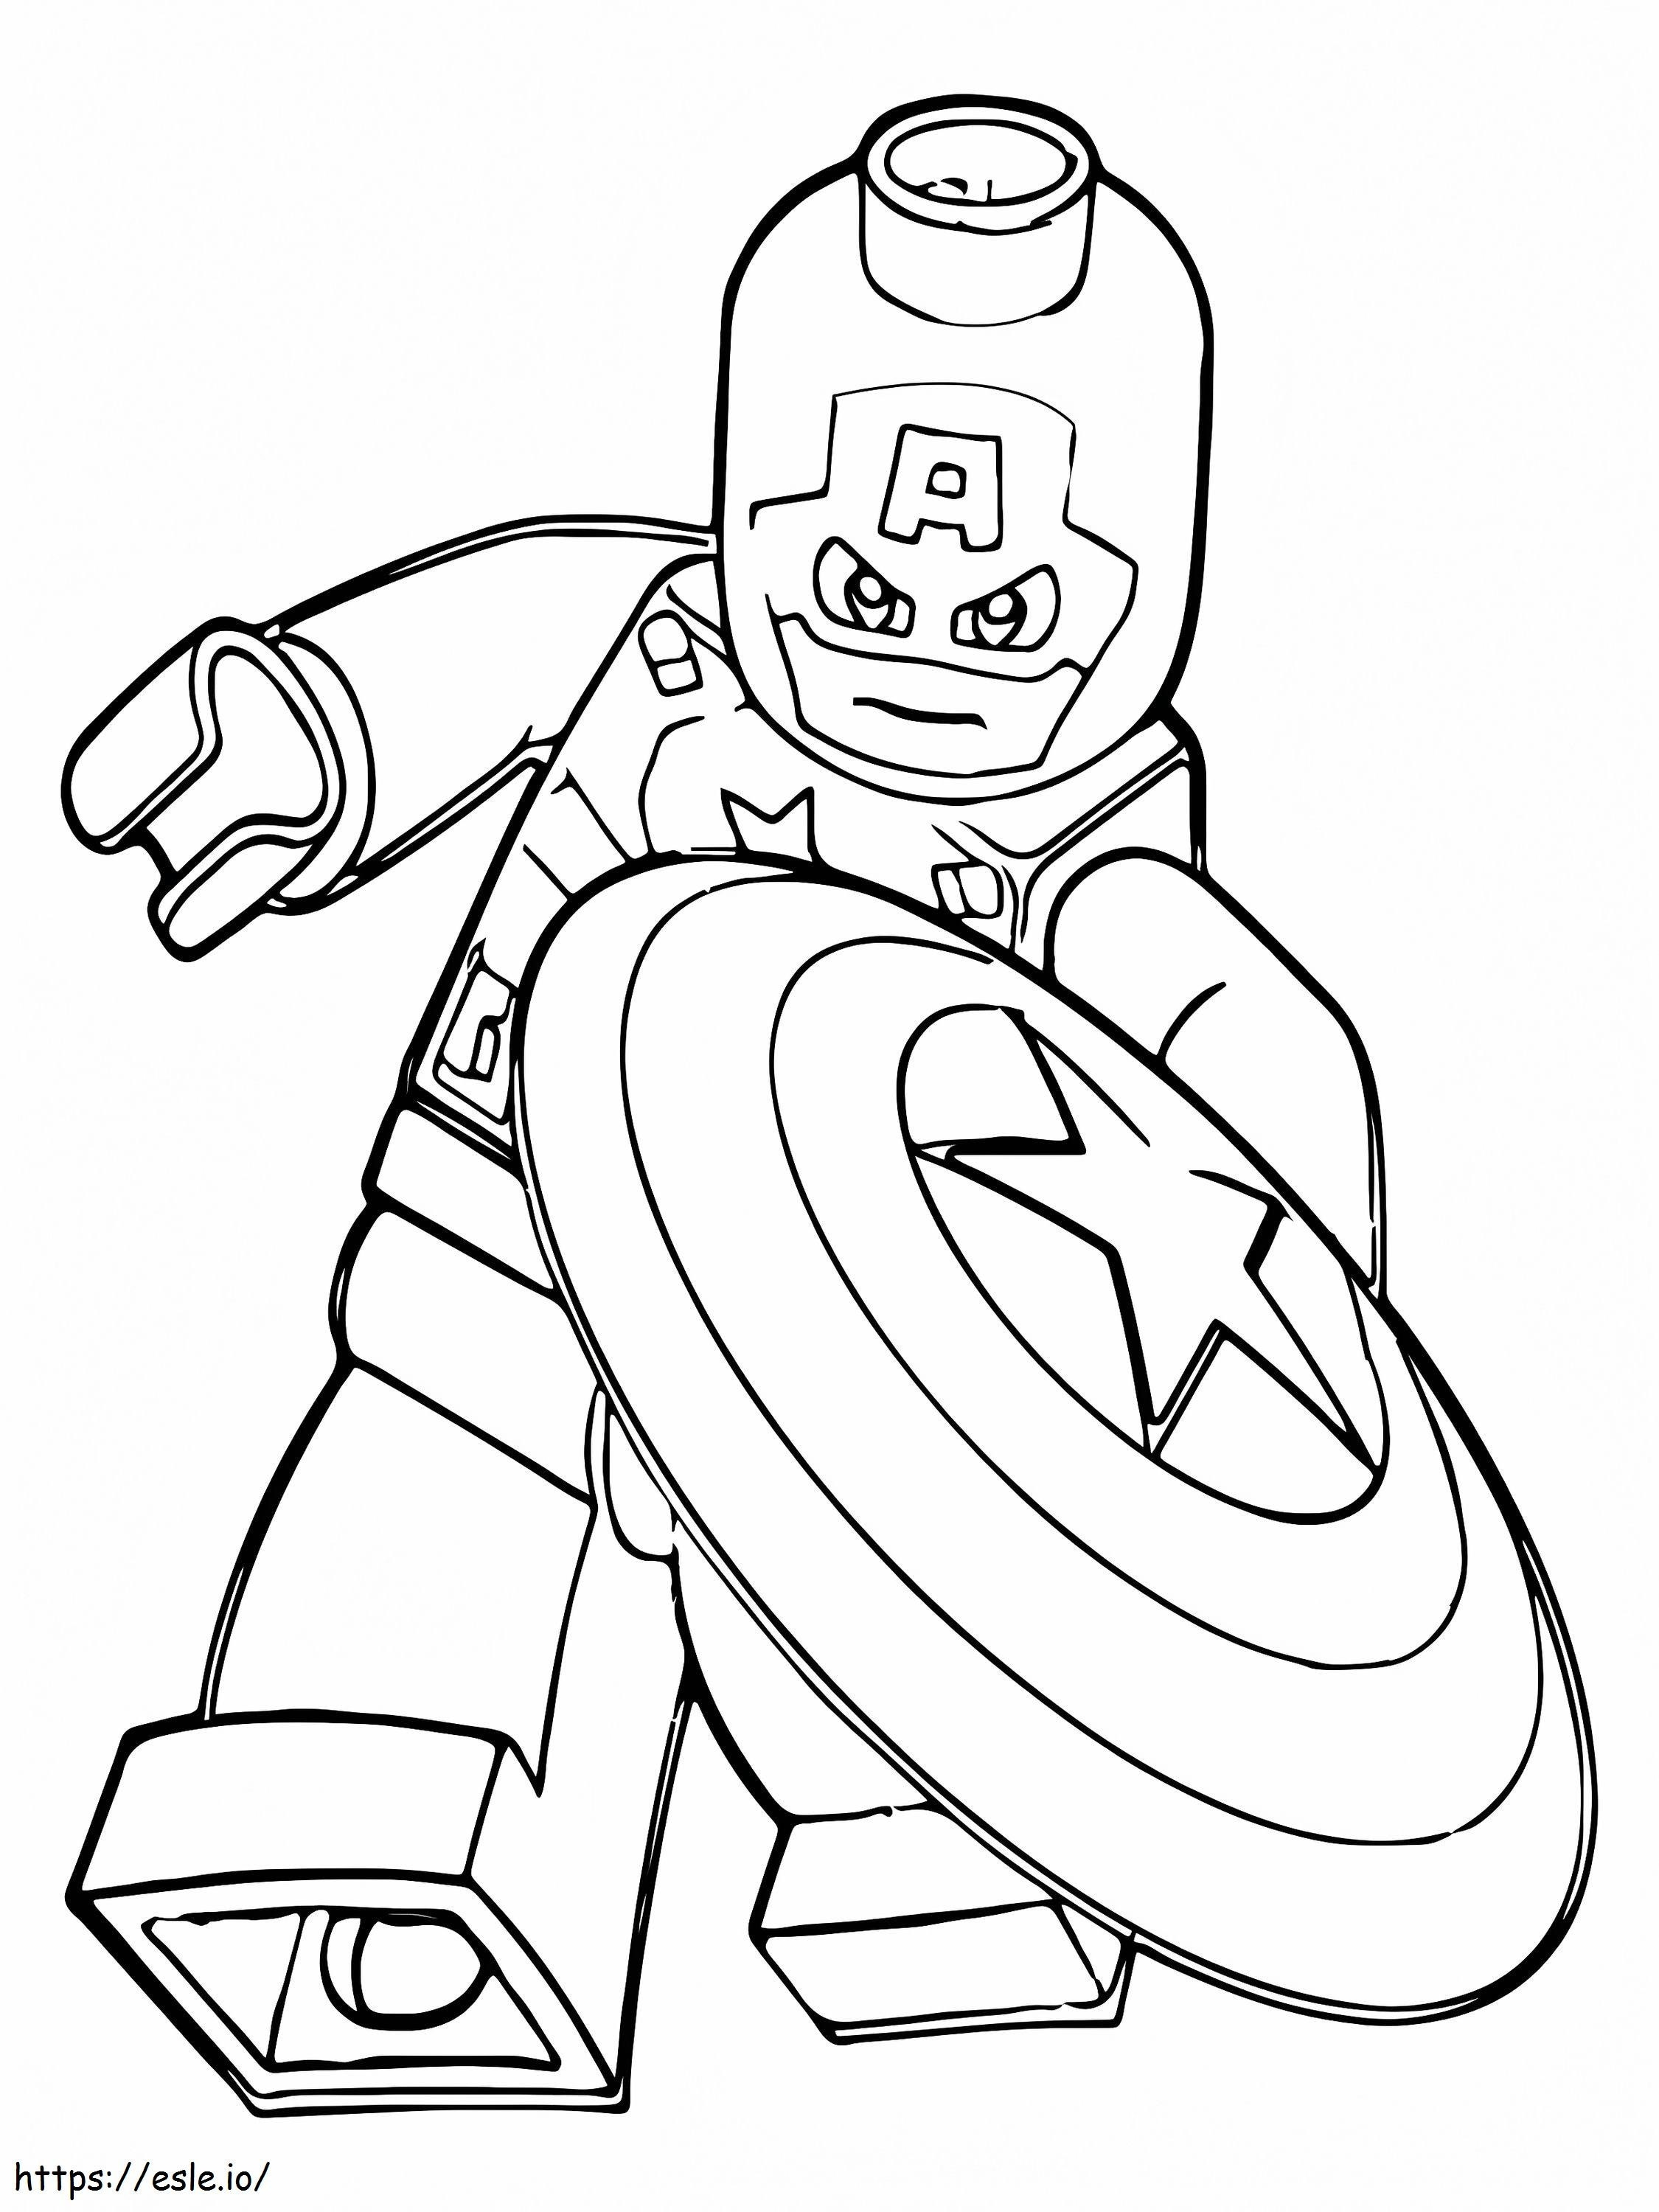 Mächtige Captain America Lego Avengers ausmalbilder